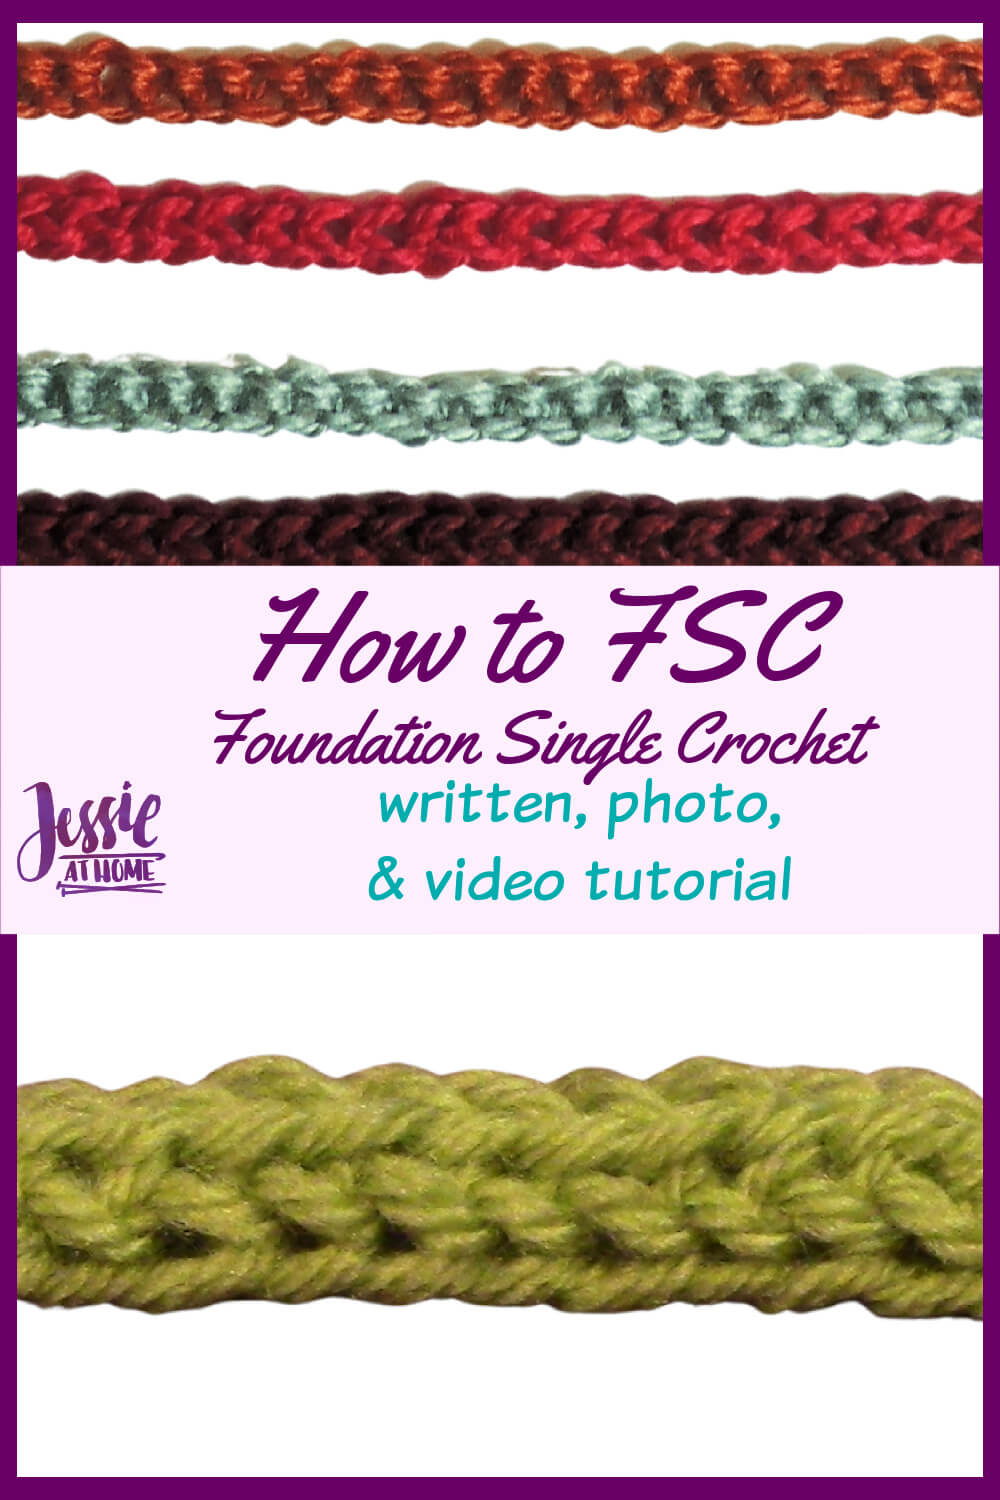 How to FSC - Foundation Single Crochet